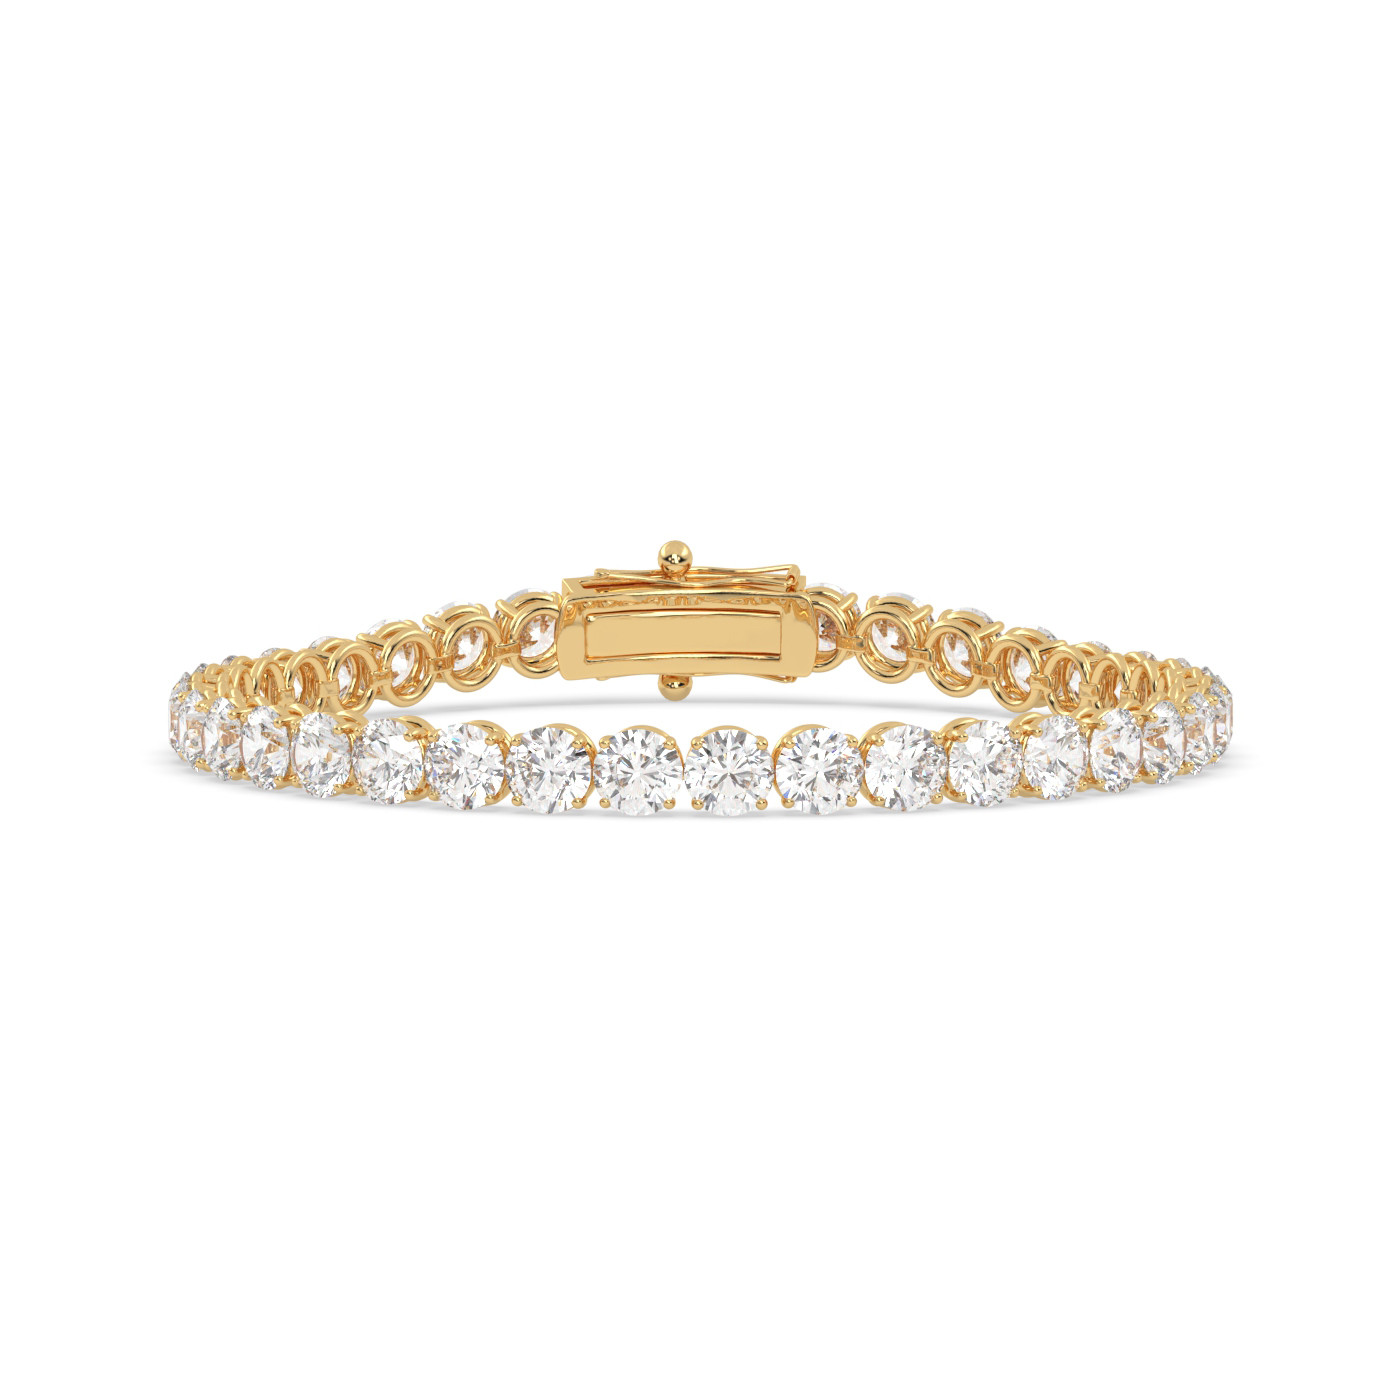 18k yellow gold  3.0 carat round diamond tennis bracelet with traditional lock sytem Photos & images